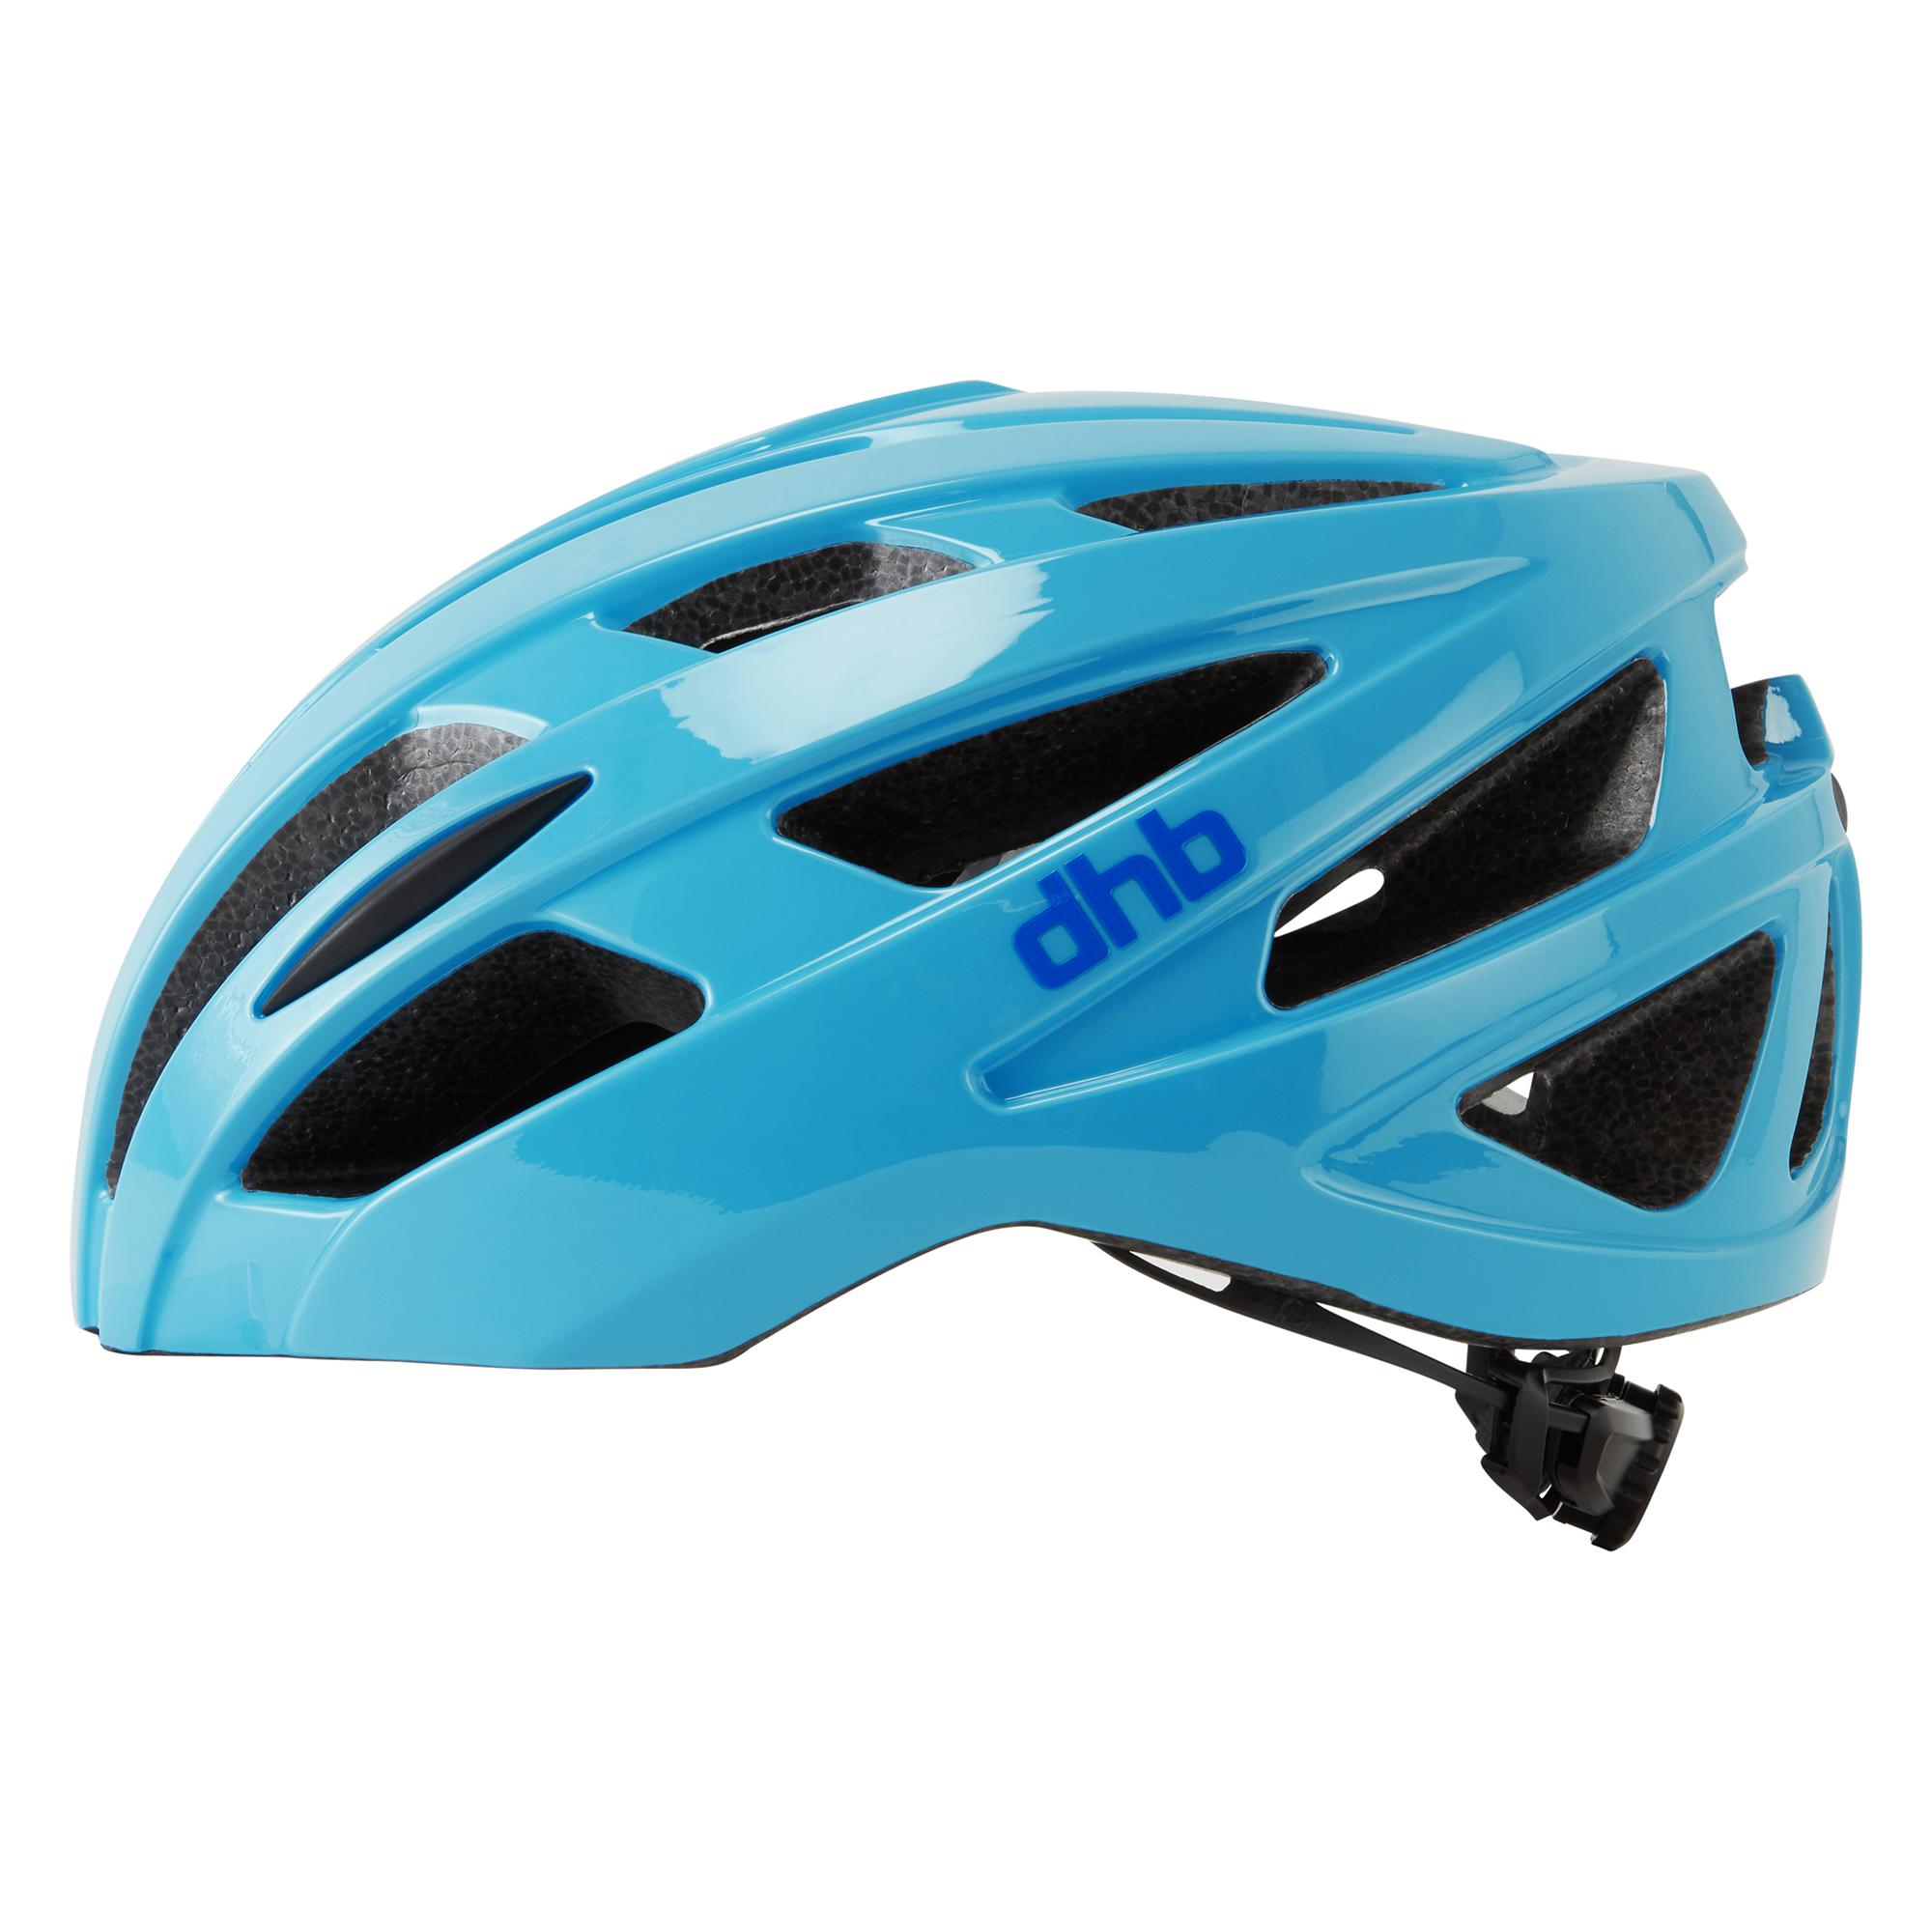 Dhb R2.0 Junior Helmet - Blue